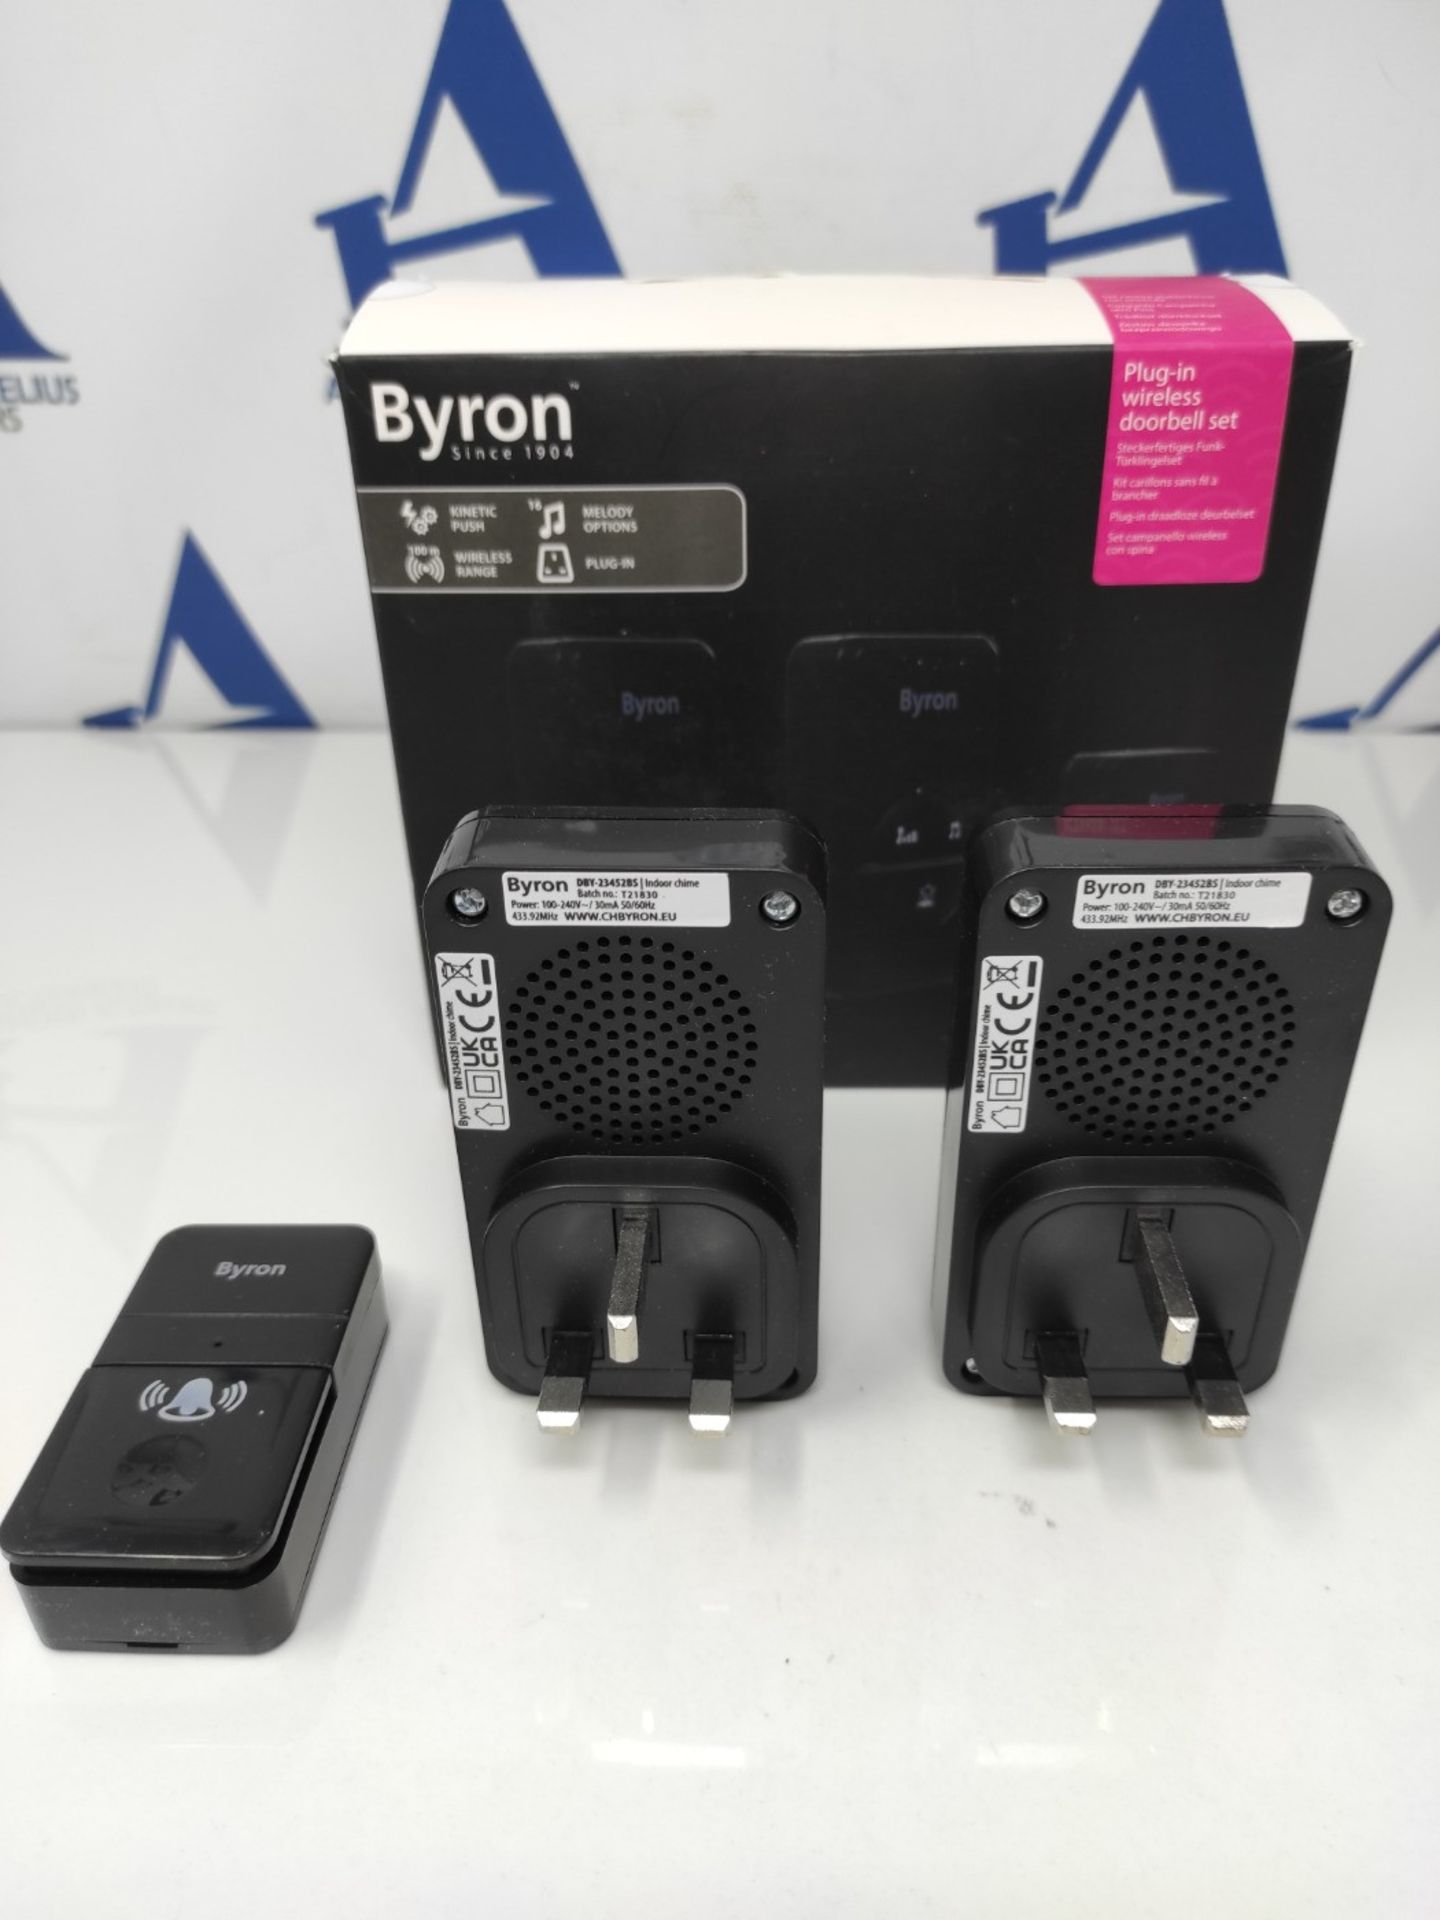 Byron DBY-23455BS Wireless Doorbell Set - 2 Plugs - Kinetic Energy - Black - Image 3 of 3